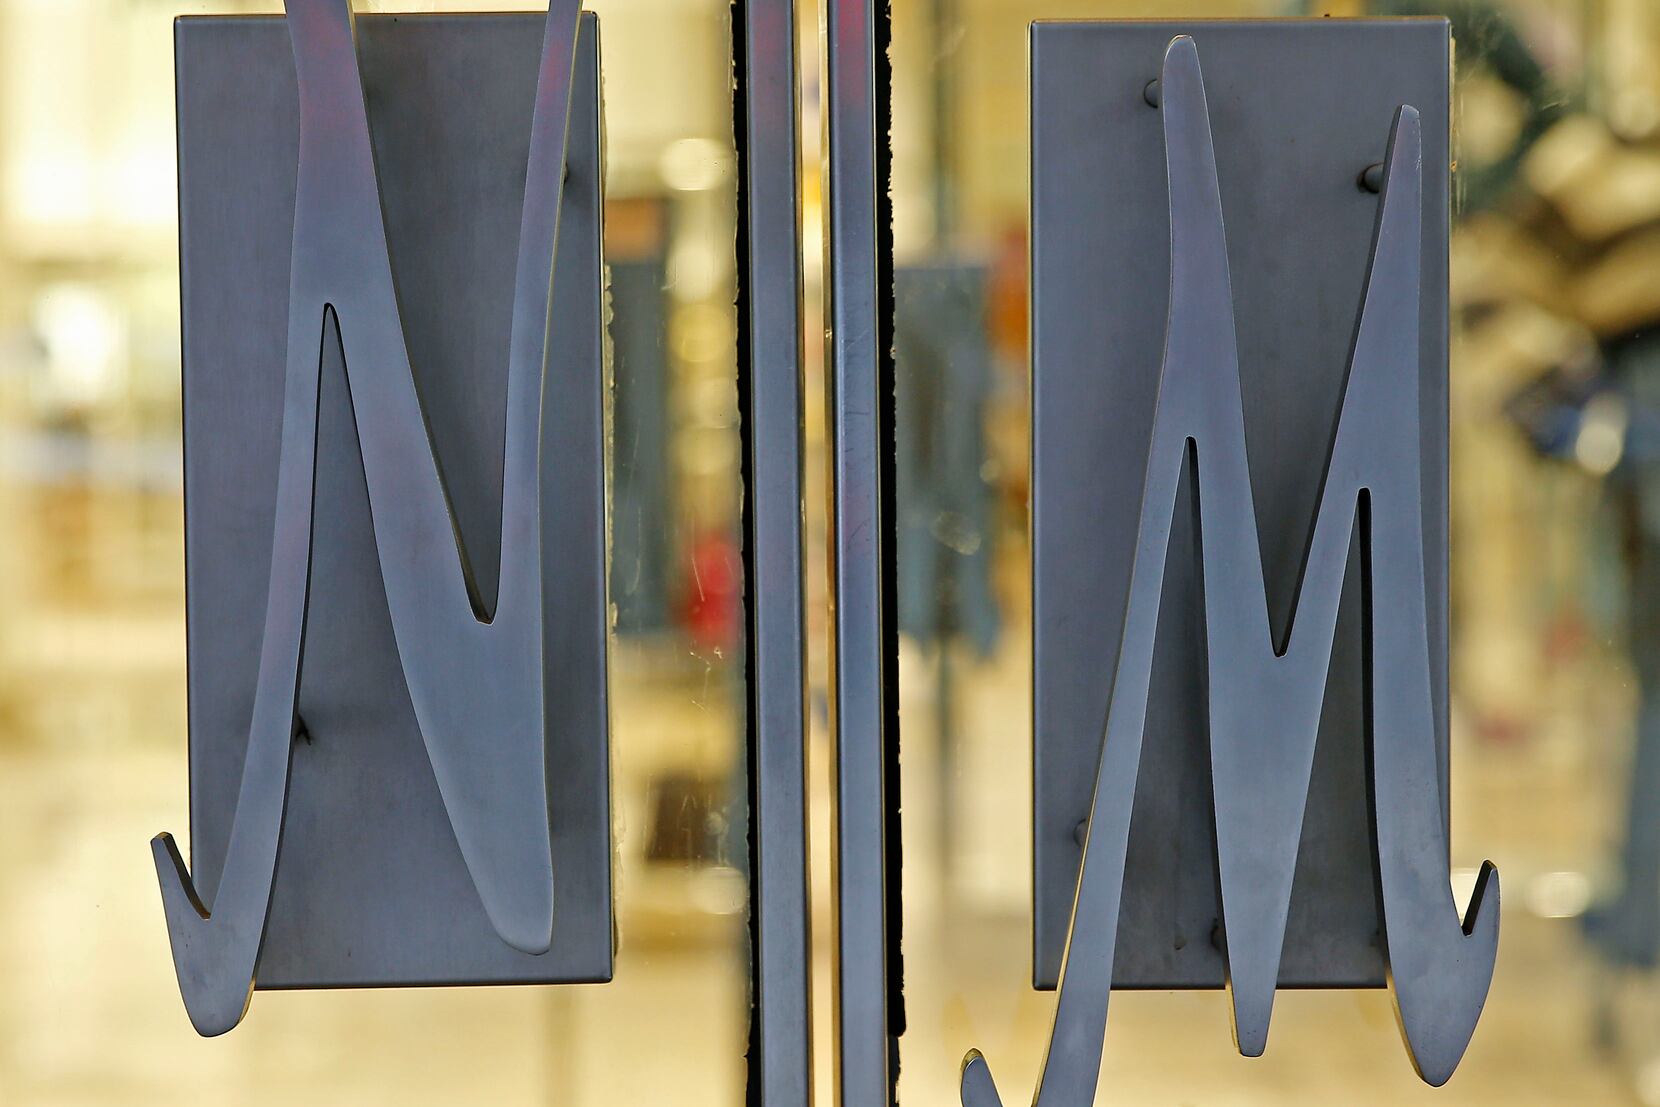 Neiman Marcus closes loan for Merrick Park store